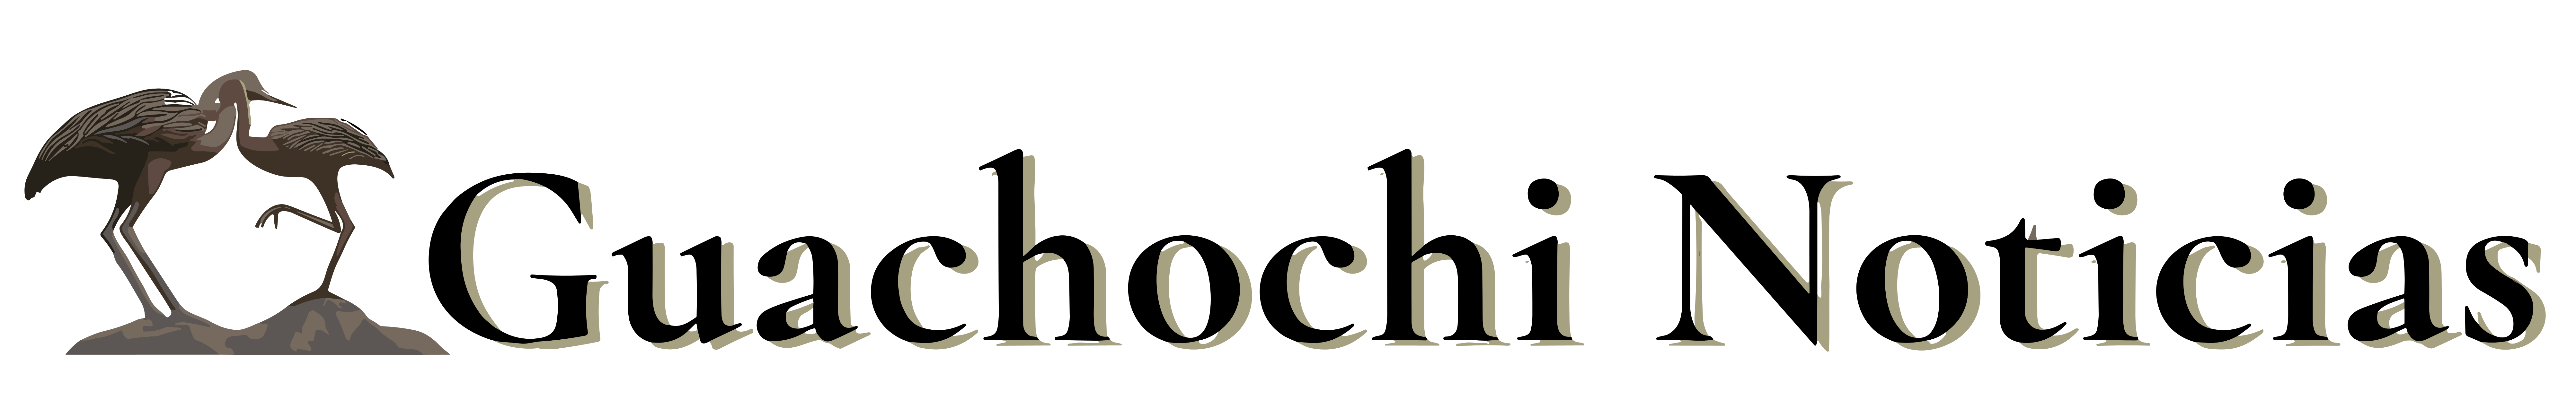 Guachochi Noticias